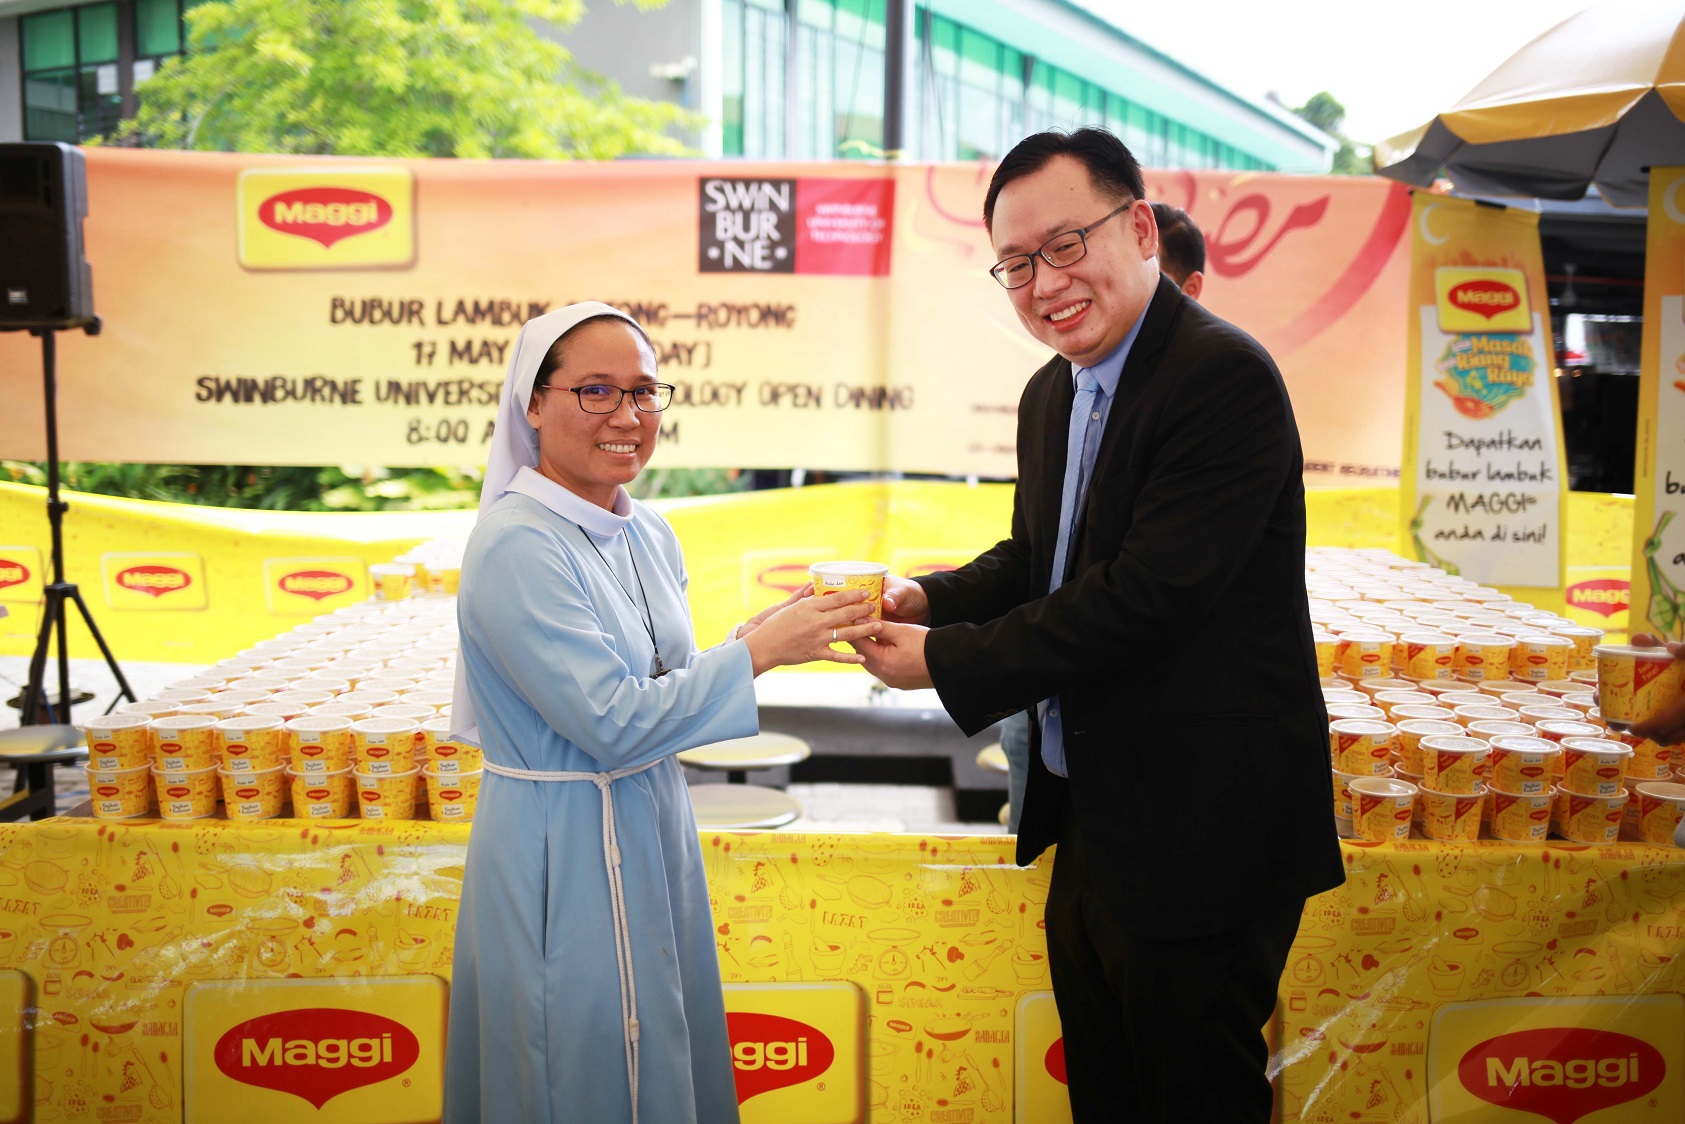 Ir. Professor Lau (right) distributing the container of bubur lambuk to a representative from Sarawak Cheshire Home.